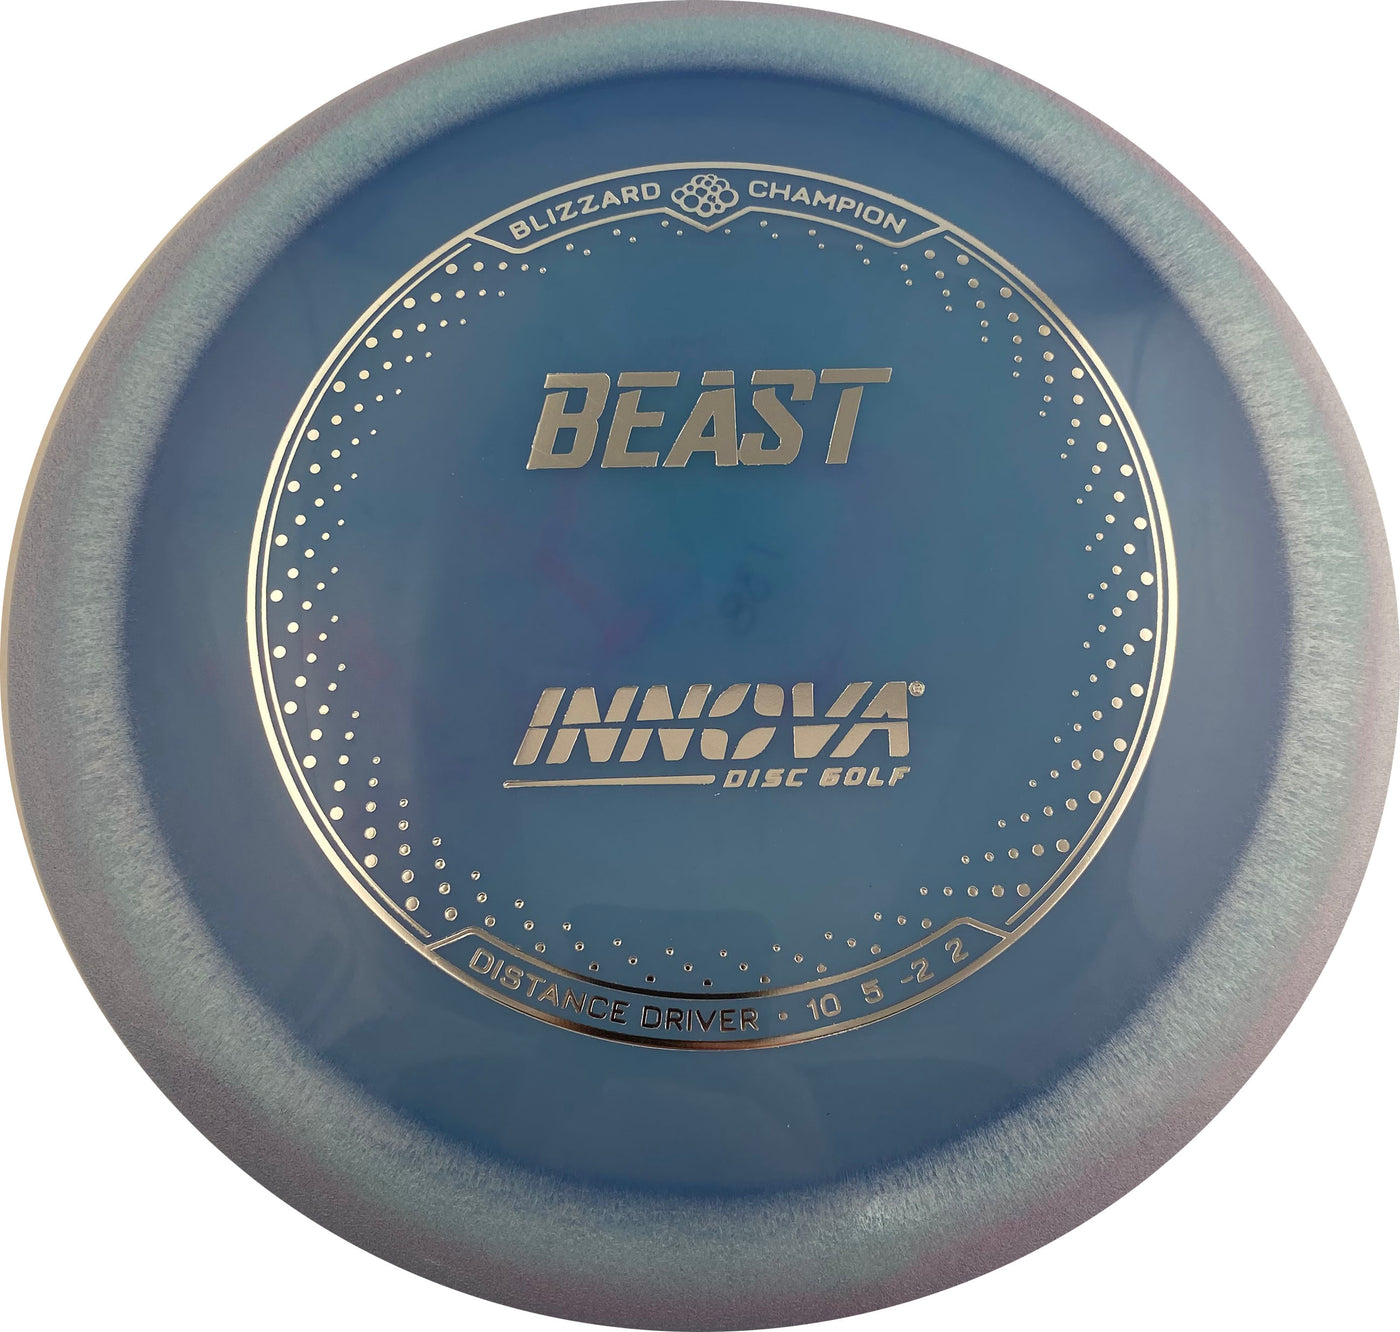 Innova Champion Blizzard Beast Distance Driver with Burst Logo Stock Stamp - Speed 10